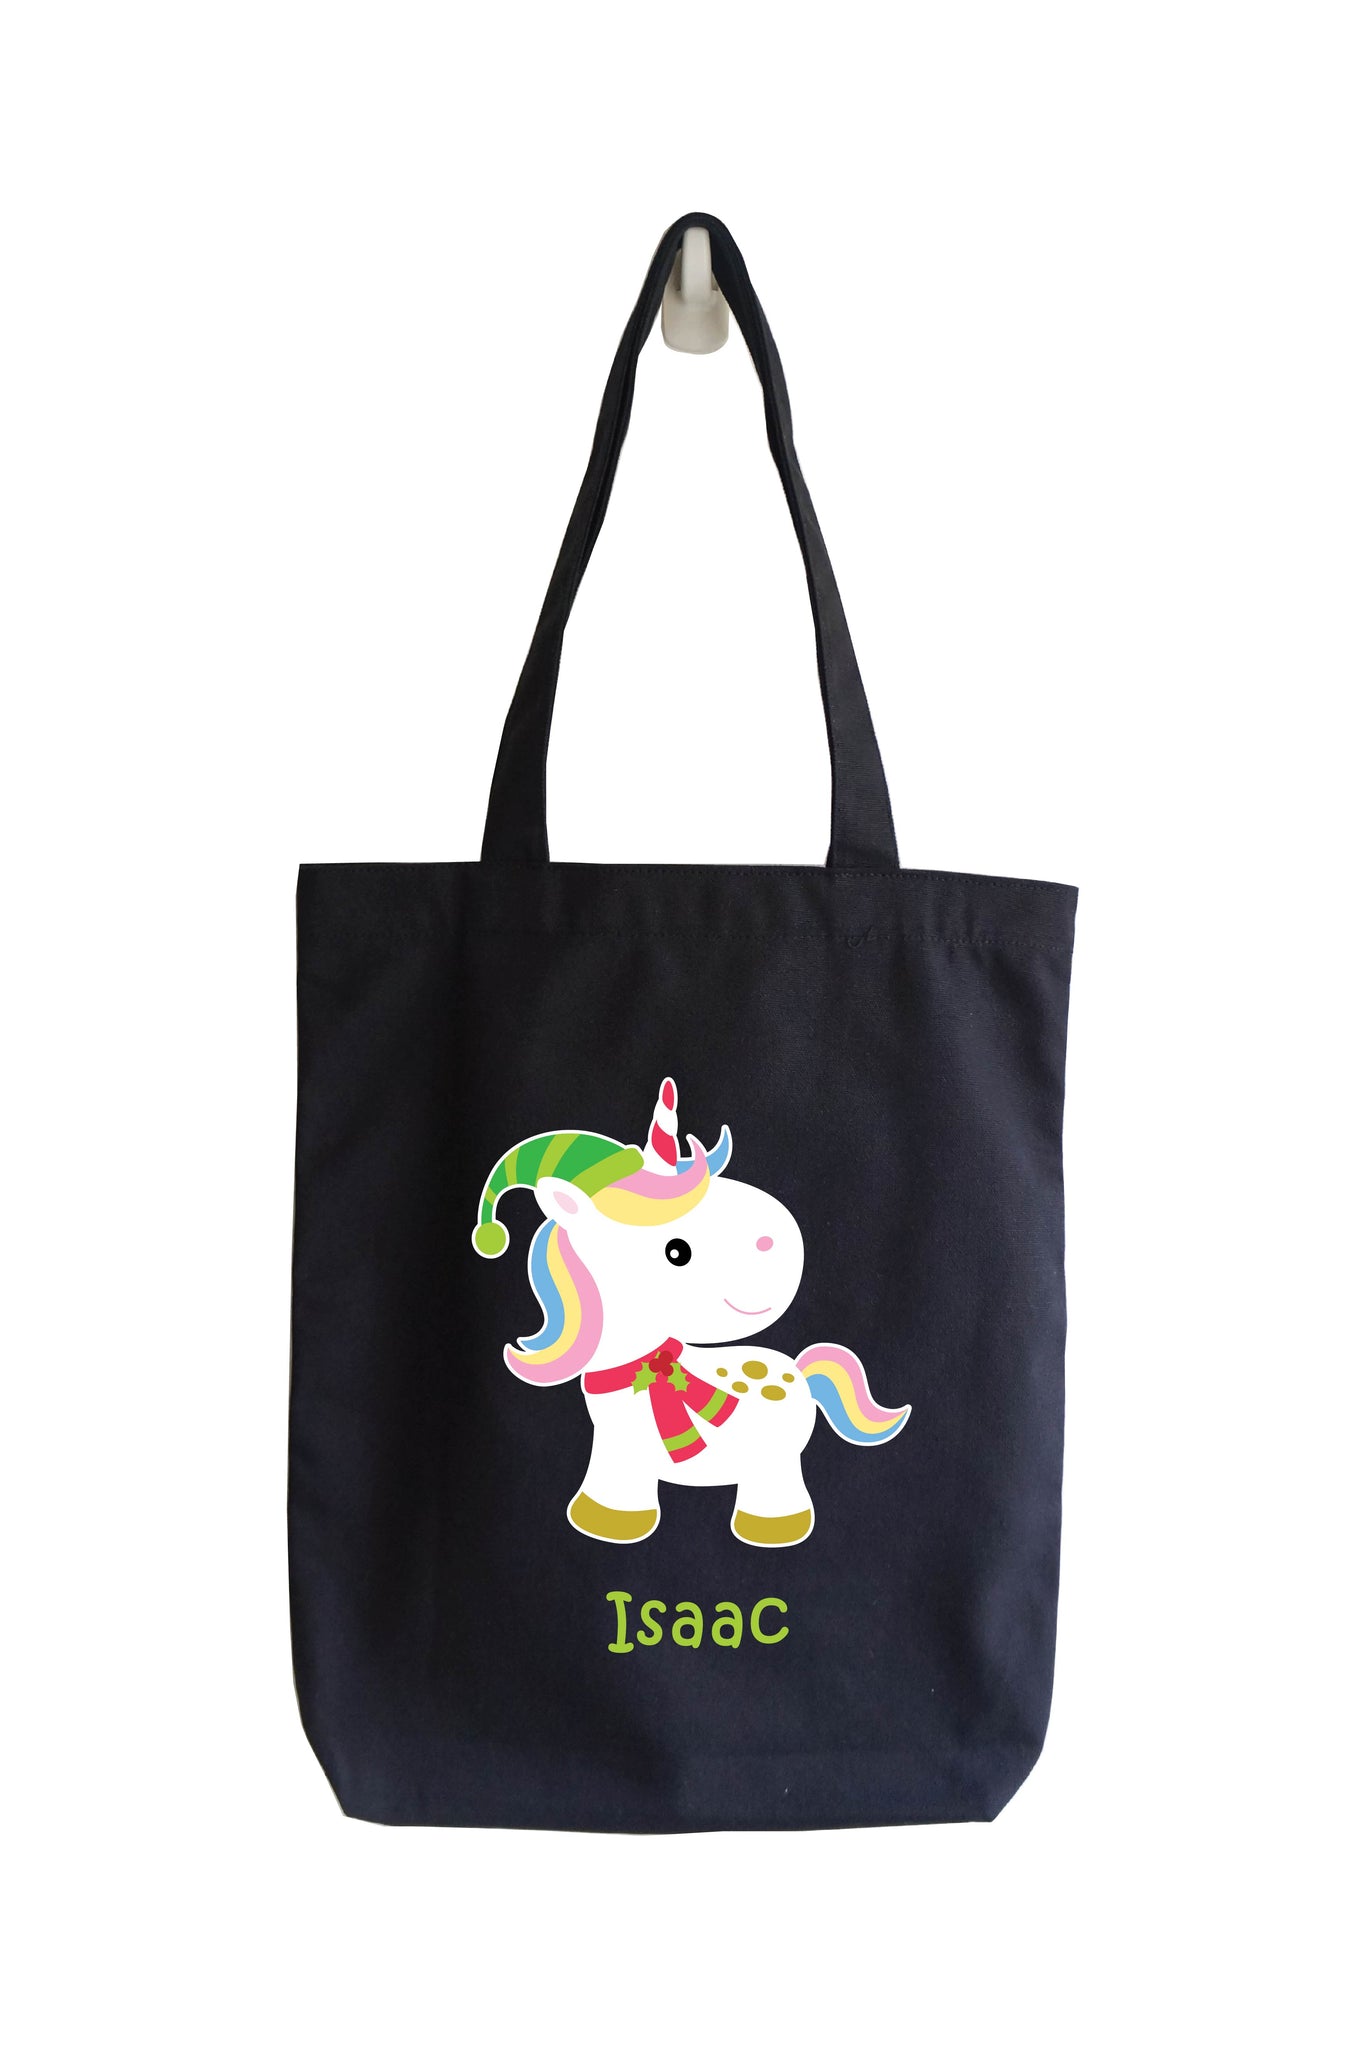 Personalised Tote Bag - Christmas Unicorn 2